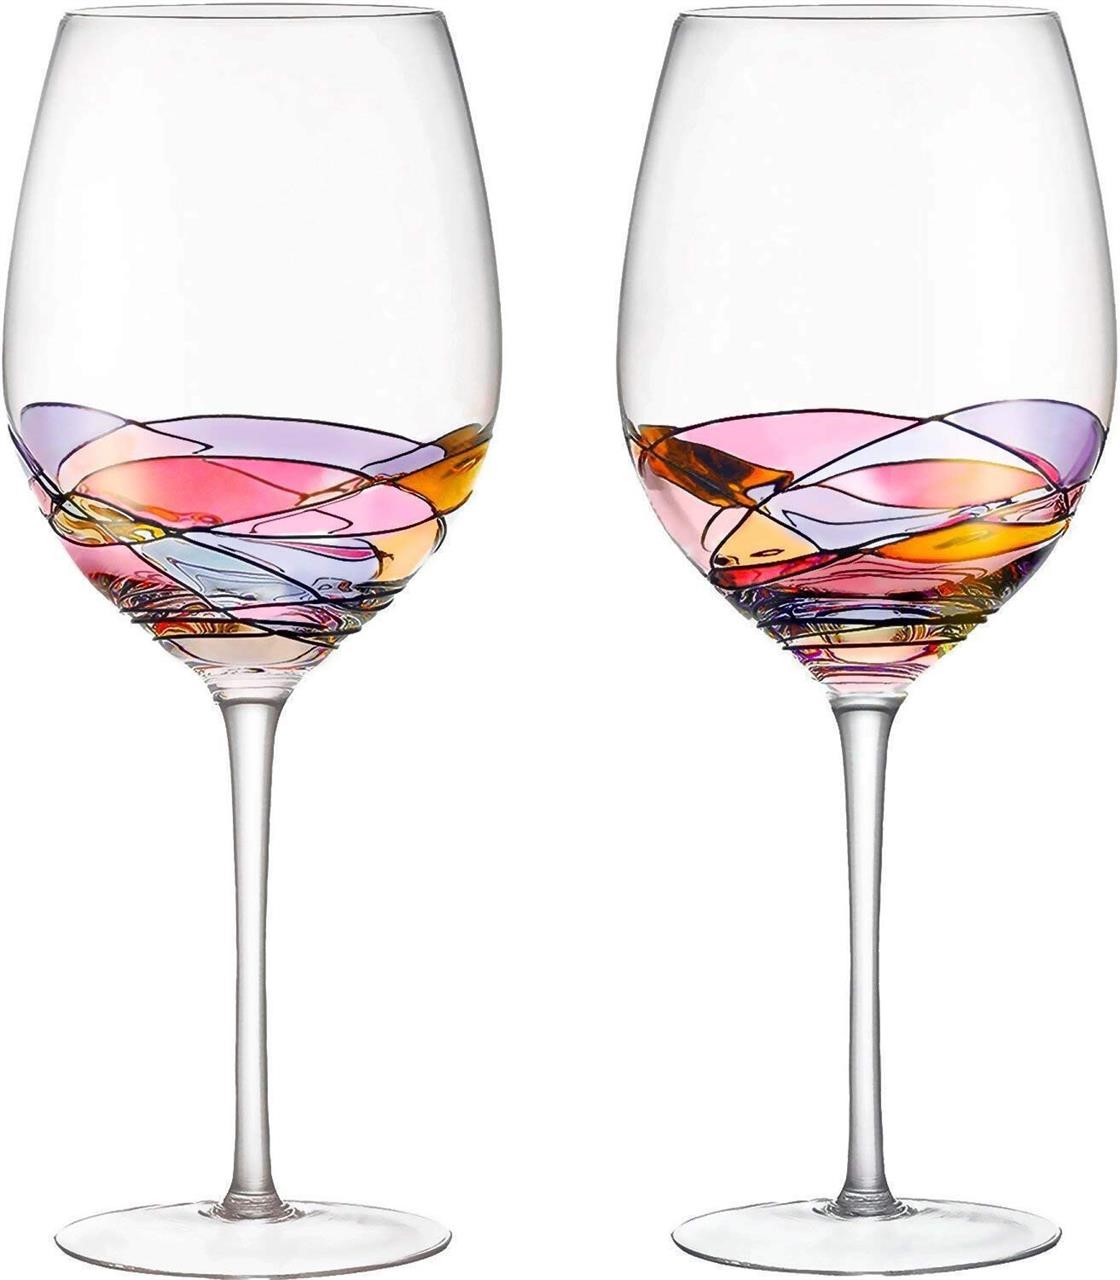 DAQQ Red Wine Glasses Set of 2 Hand Painted Design